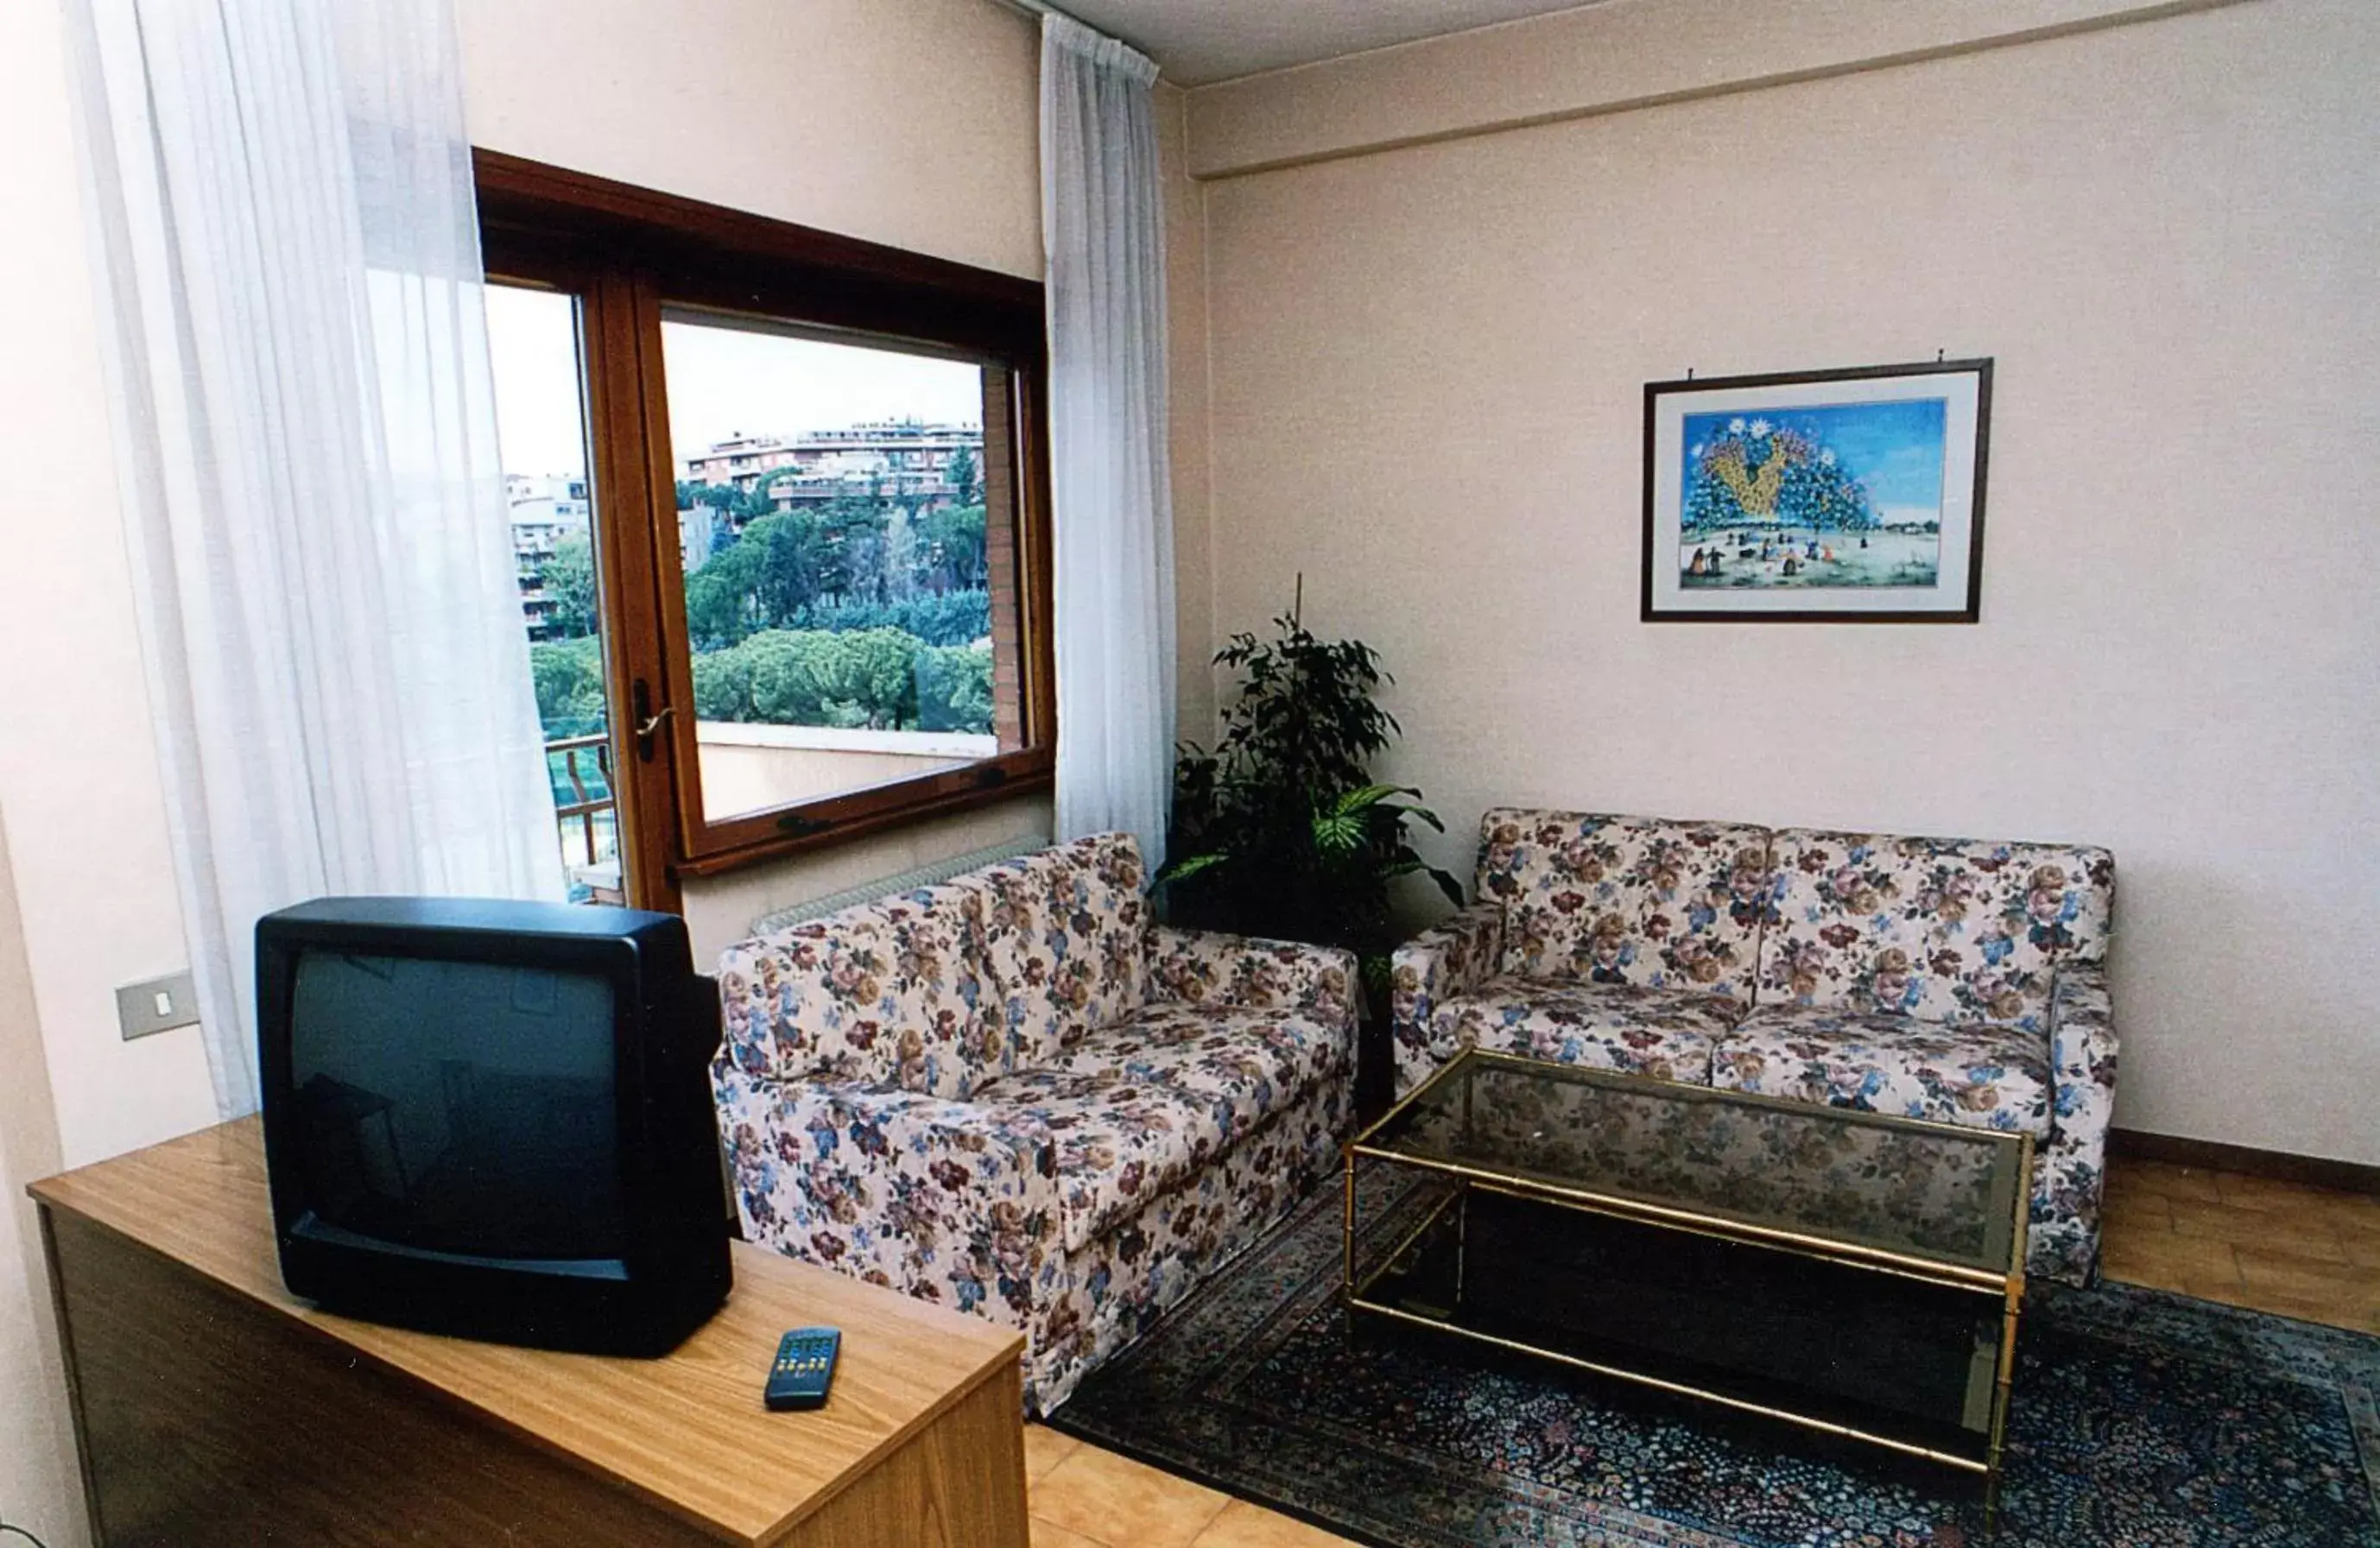 TV and multimedia, Seating Area in Eur Nir Residence